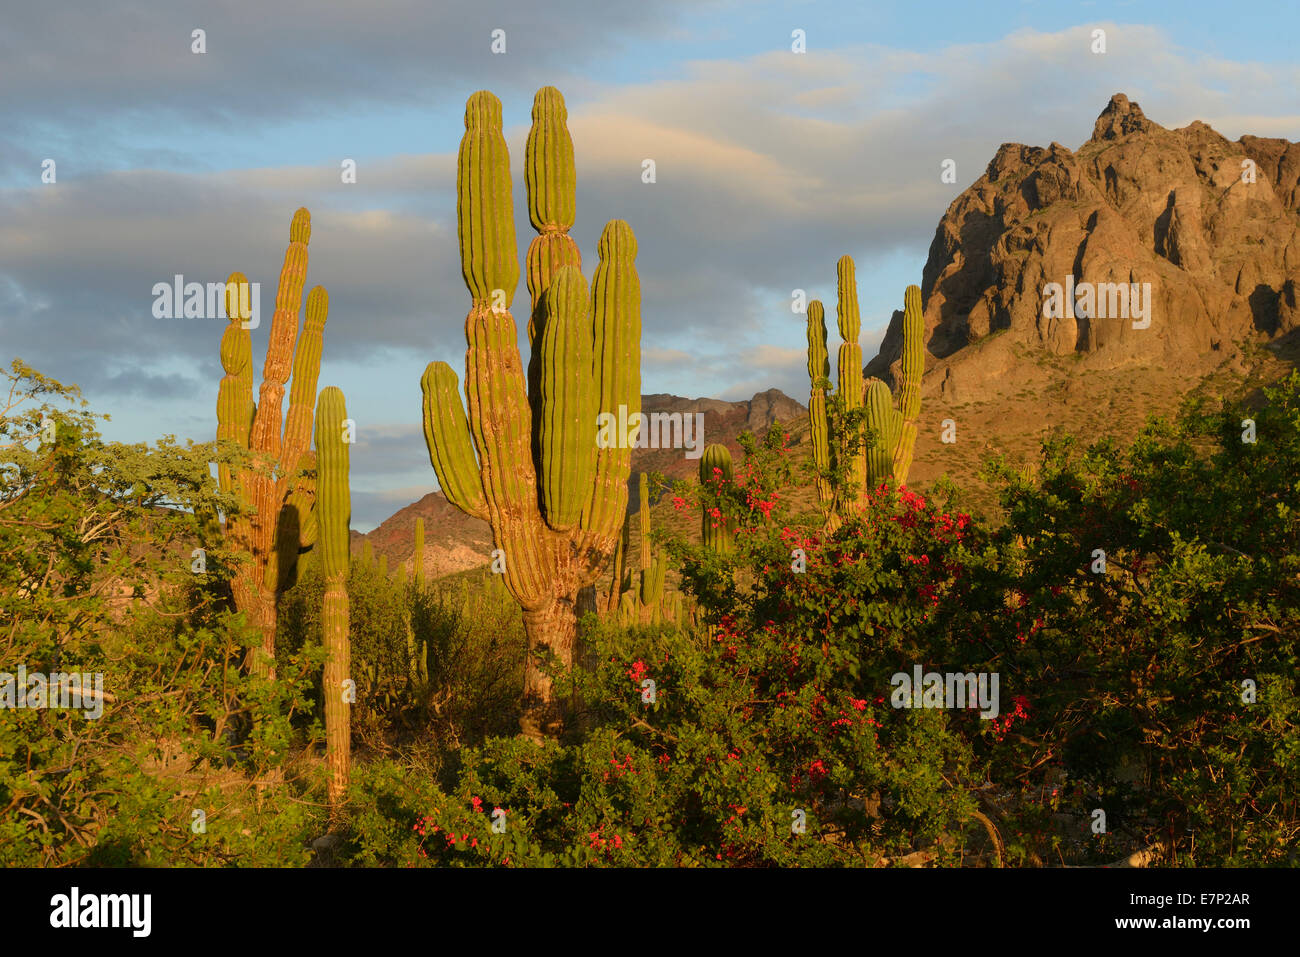 Mexico, North America, Baja, Baja California, La Paz, desert, landscape, vertical, cactus, cardon, mountains, nature, scenic, bl Stock Photo